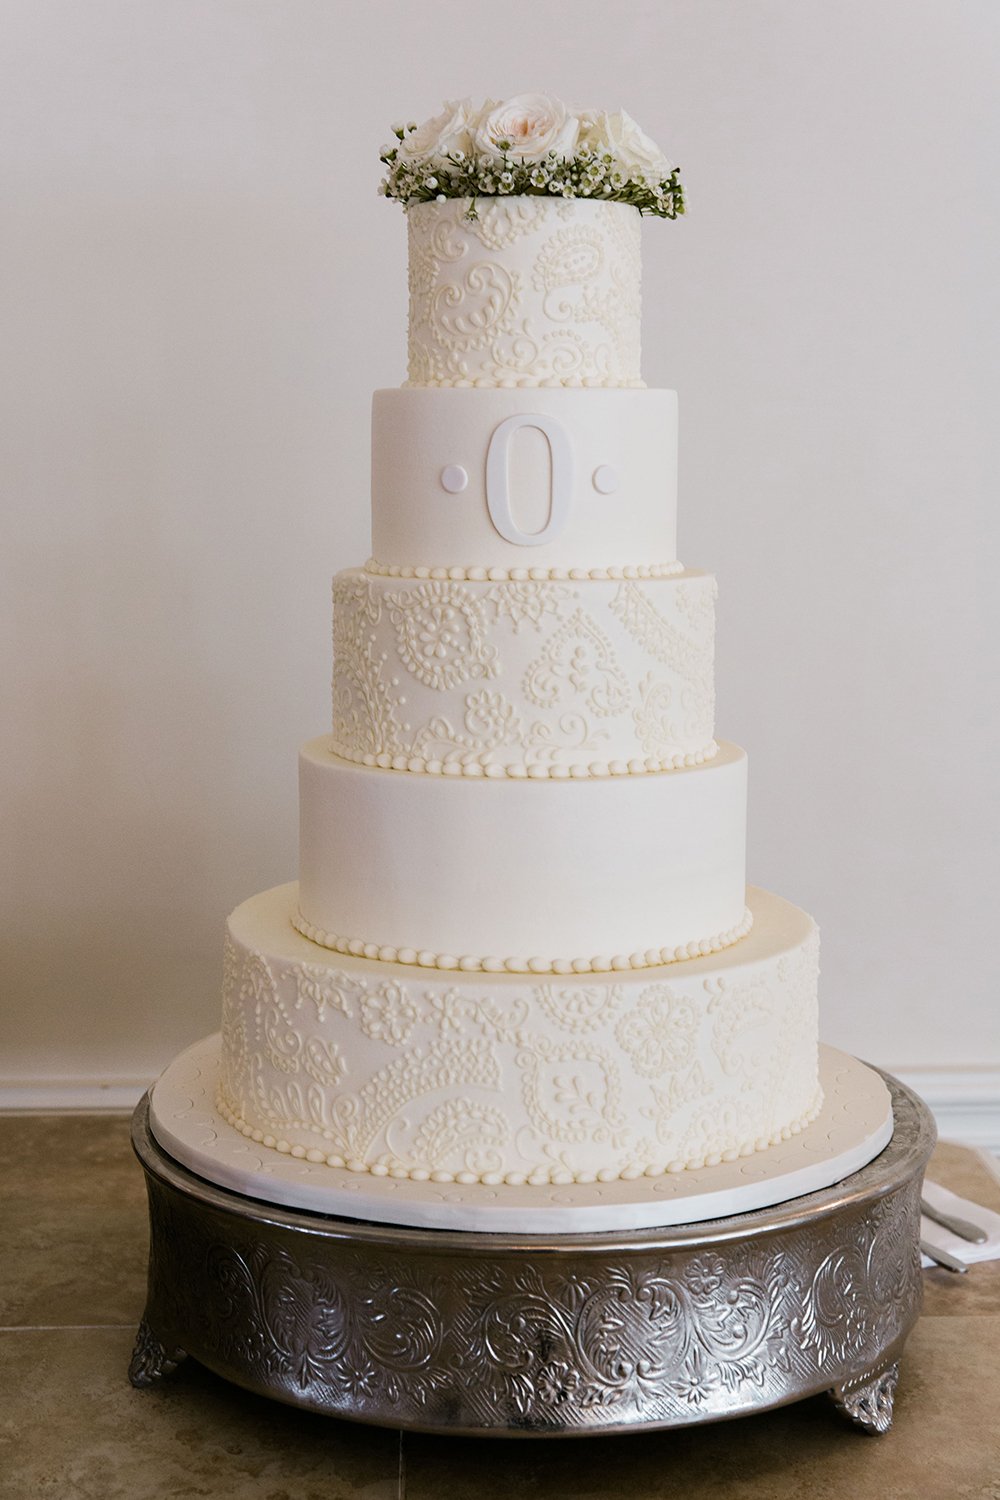 cakes by gina - wedding cake - classic